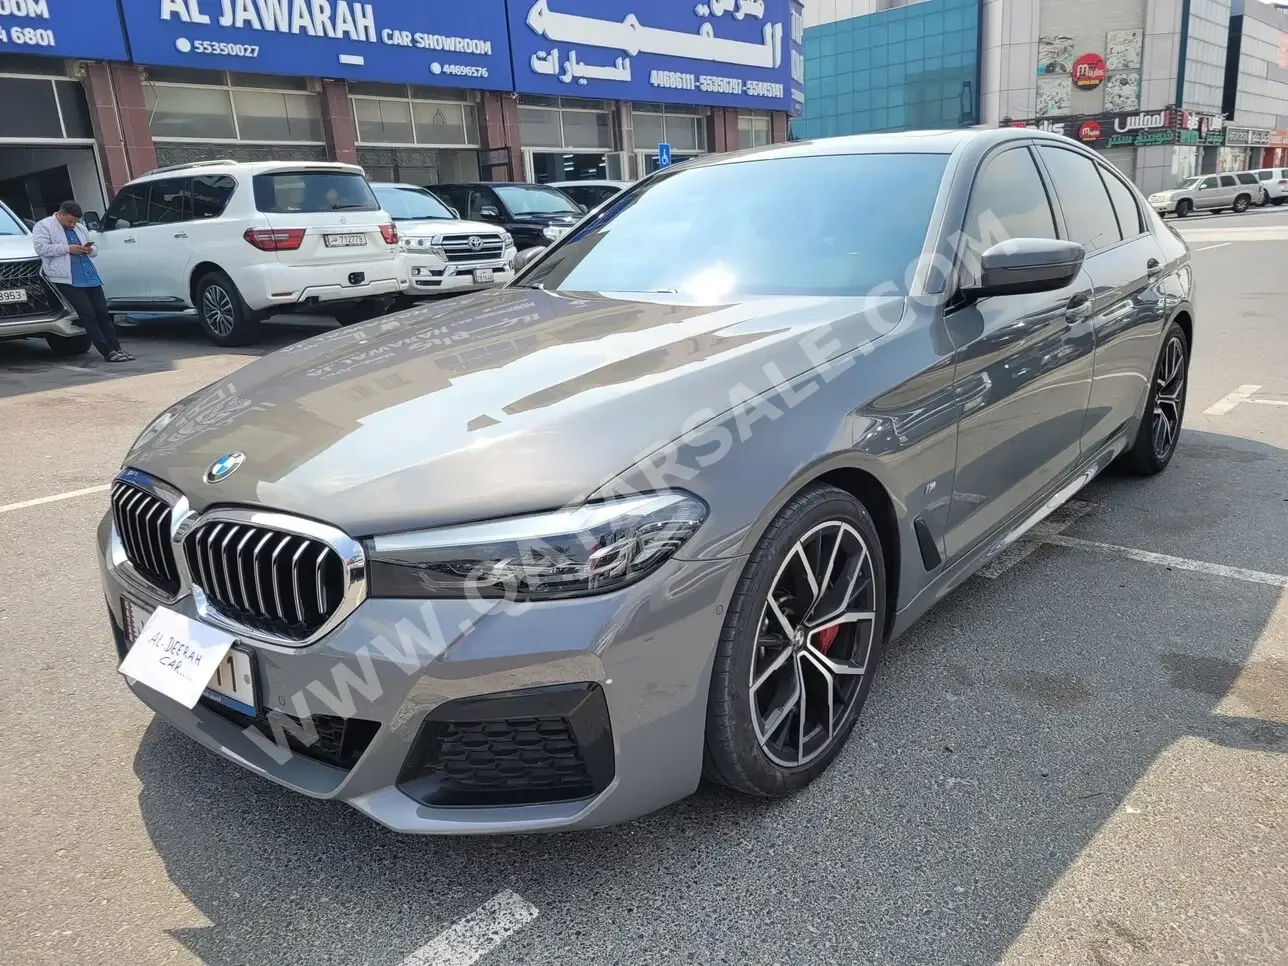  BMW  5-Series  530i  2022  Automatic  59,000 Km  4 Cylinder  Rear Wheel Drive (RWD)  Sedan  Gray  With Warranty